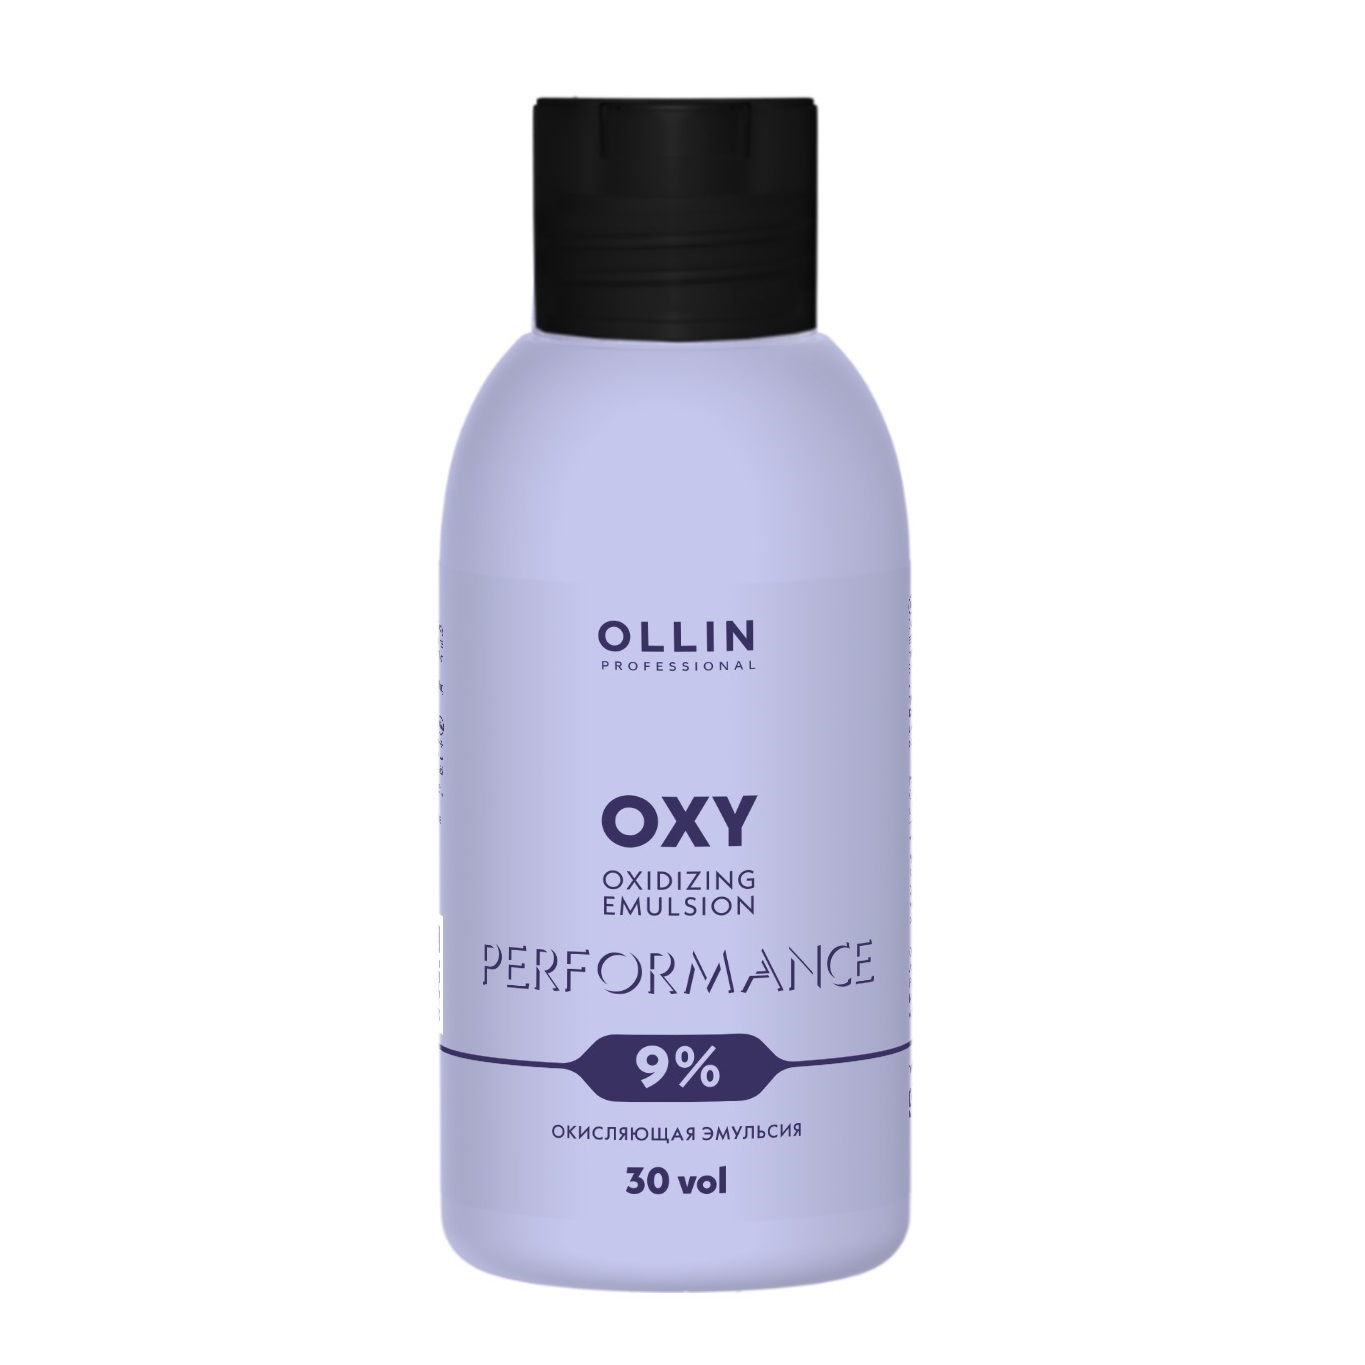 Ollin Professional Окисляющая эмульсия 9% 30 vol, 90 мл (Ollin Professional, Performance)